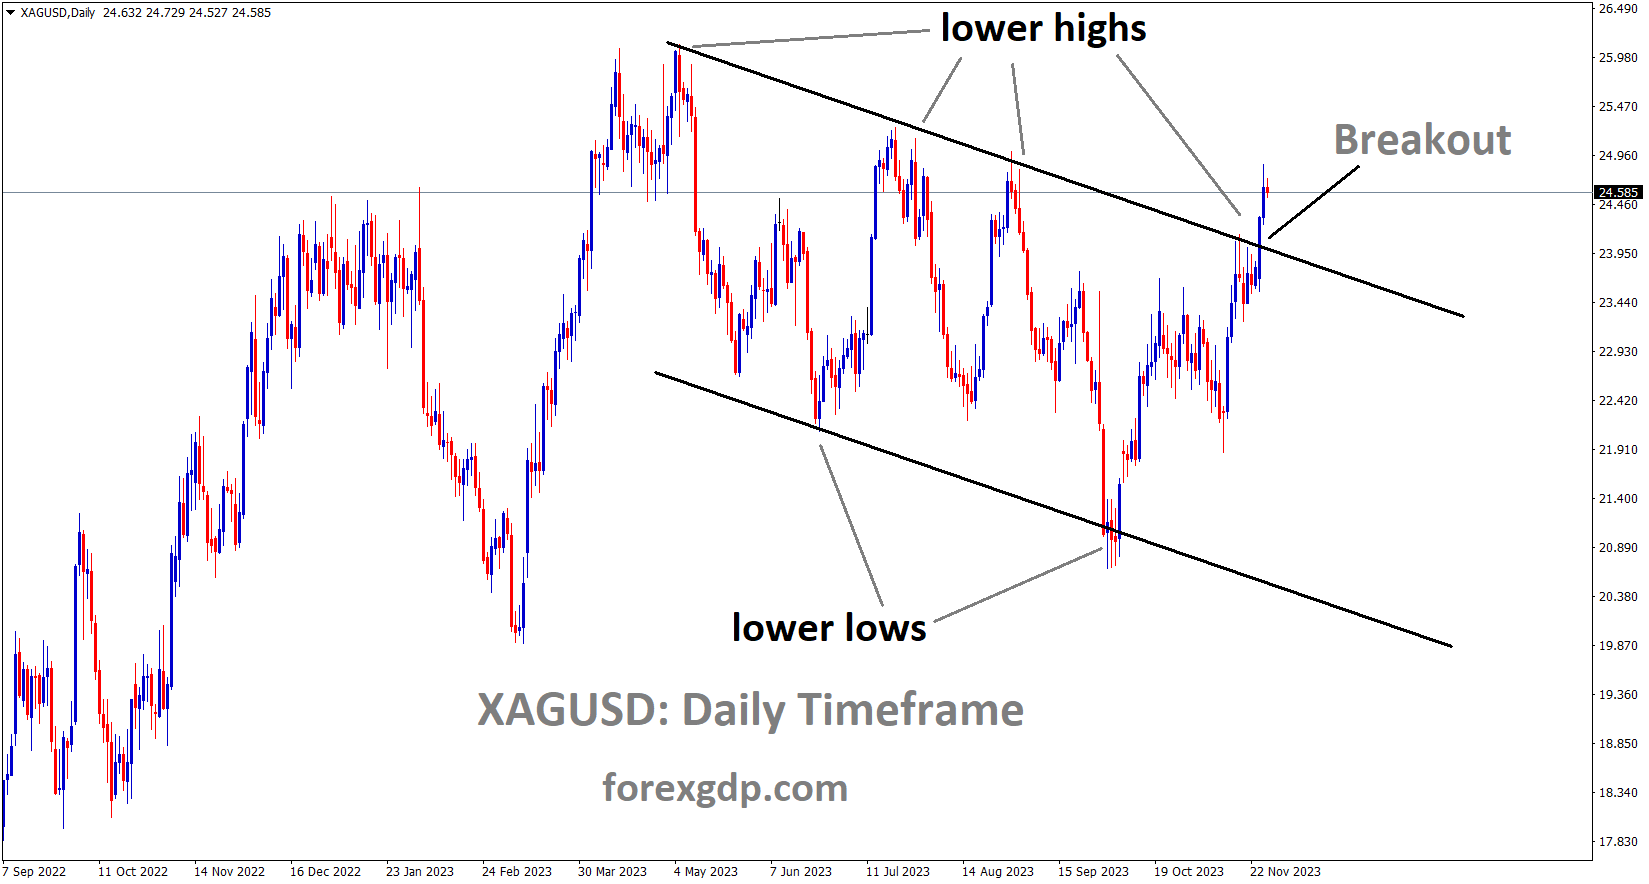 XAGUSD Silver price has broken the Descending channel in upside 1